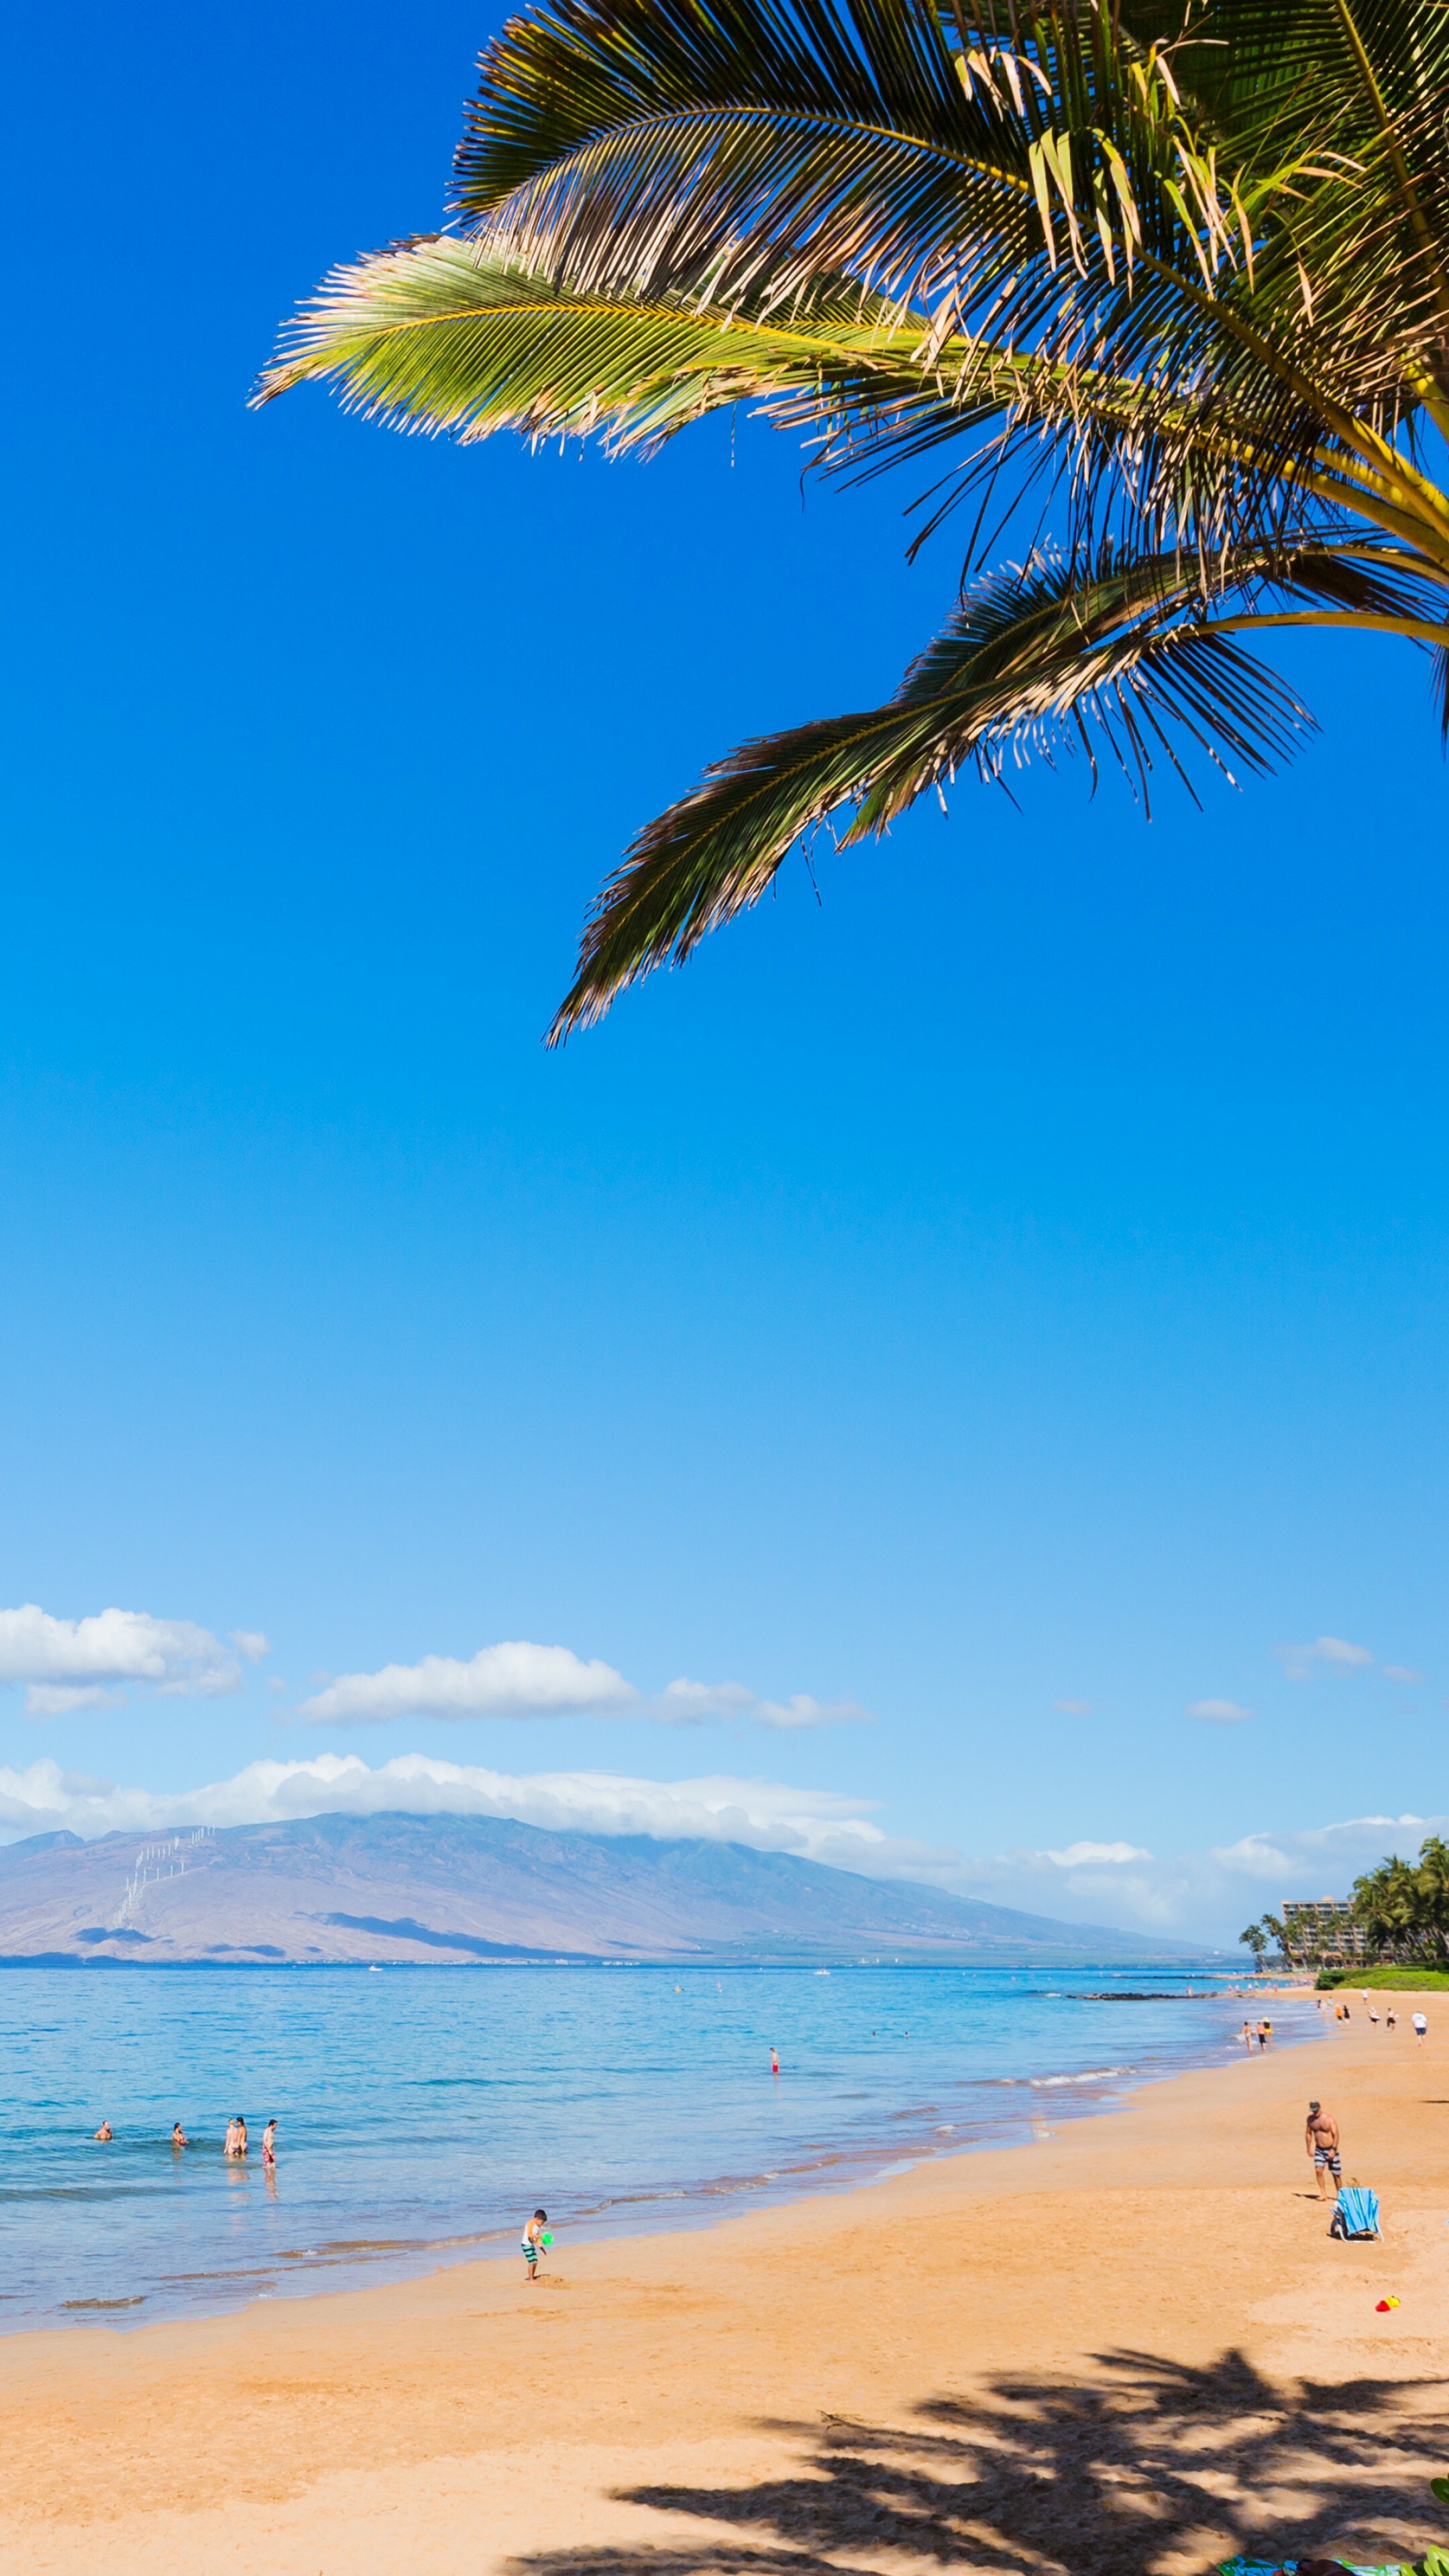 Maui (Hawaii): The island has a population of 169,000, the third-highest of the Hawaiian Islands. 2160x3840 4K Background.